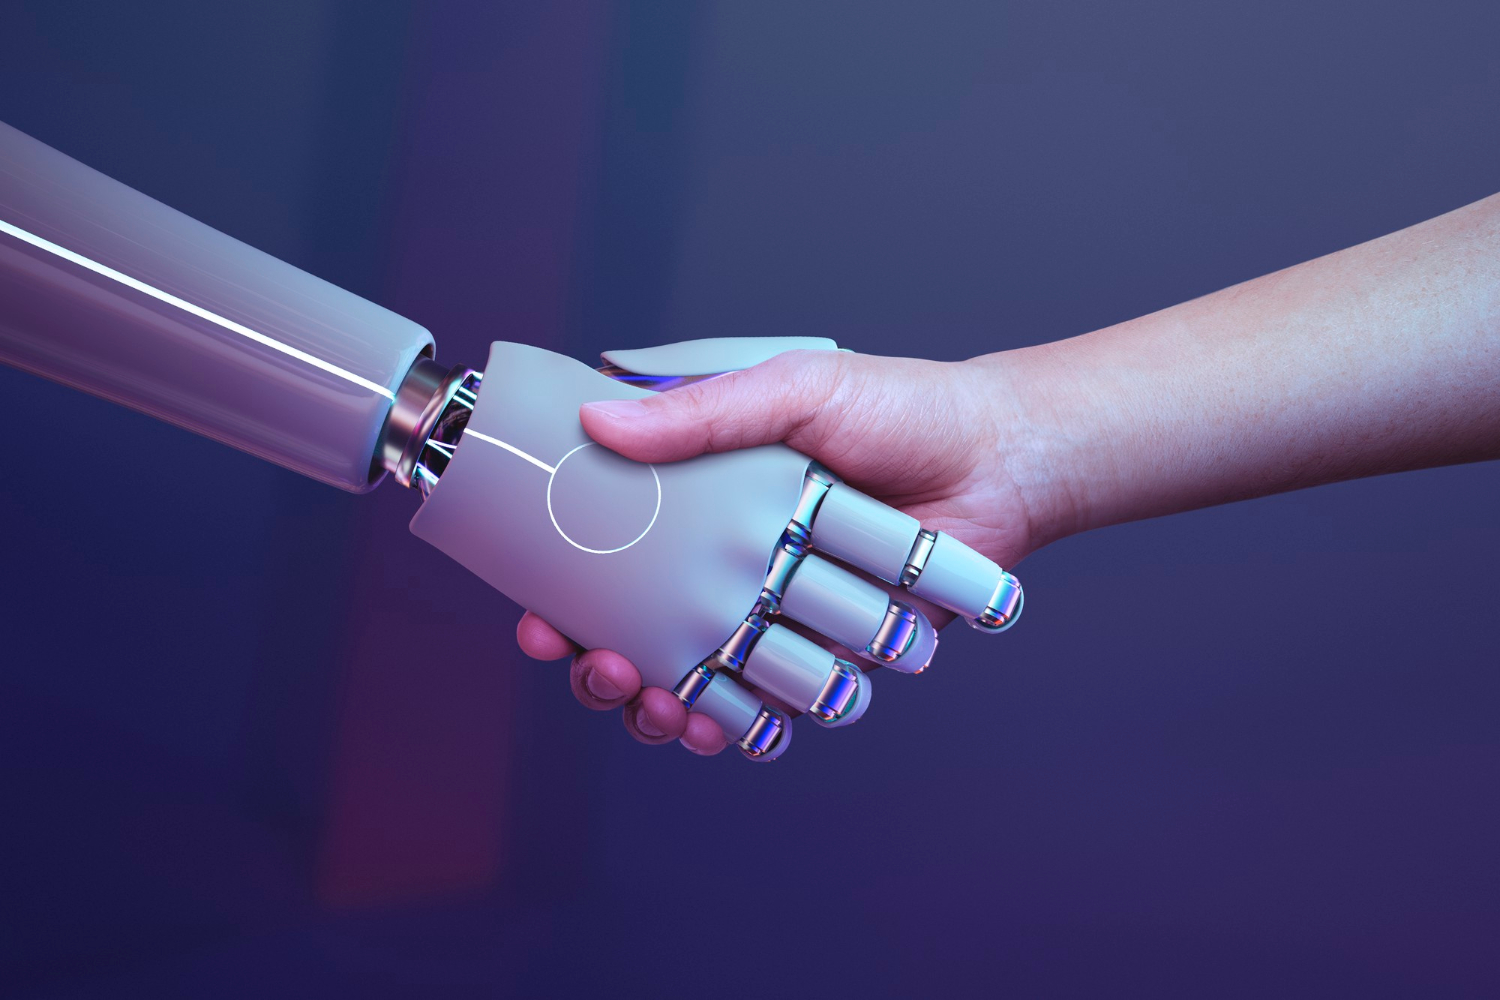 robot-handshake-human-background-futuristic-digital-age_rawpixel_com_freepik.jpg